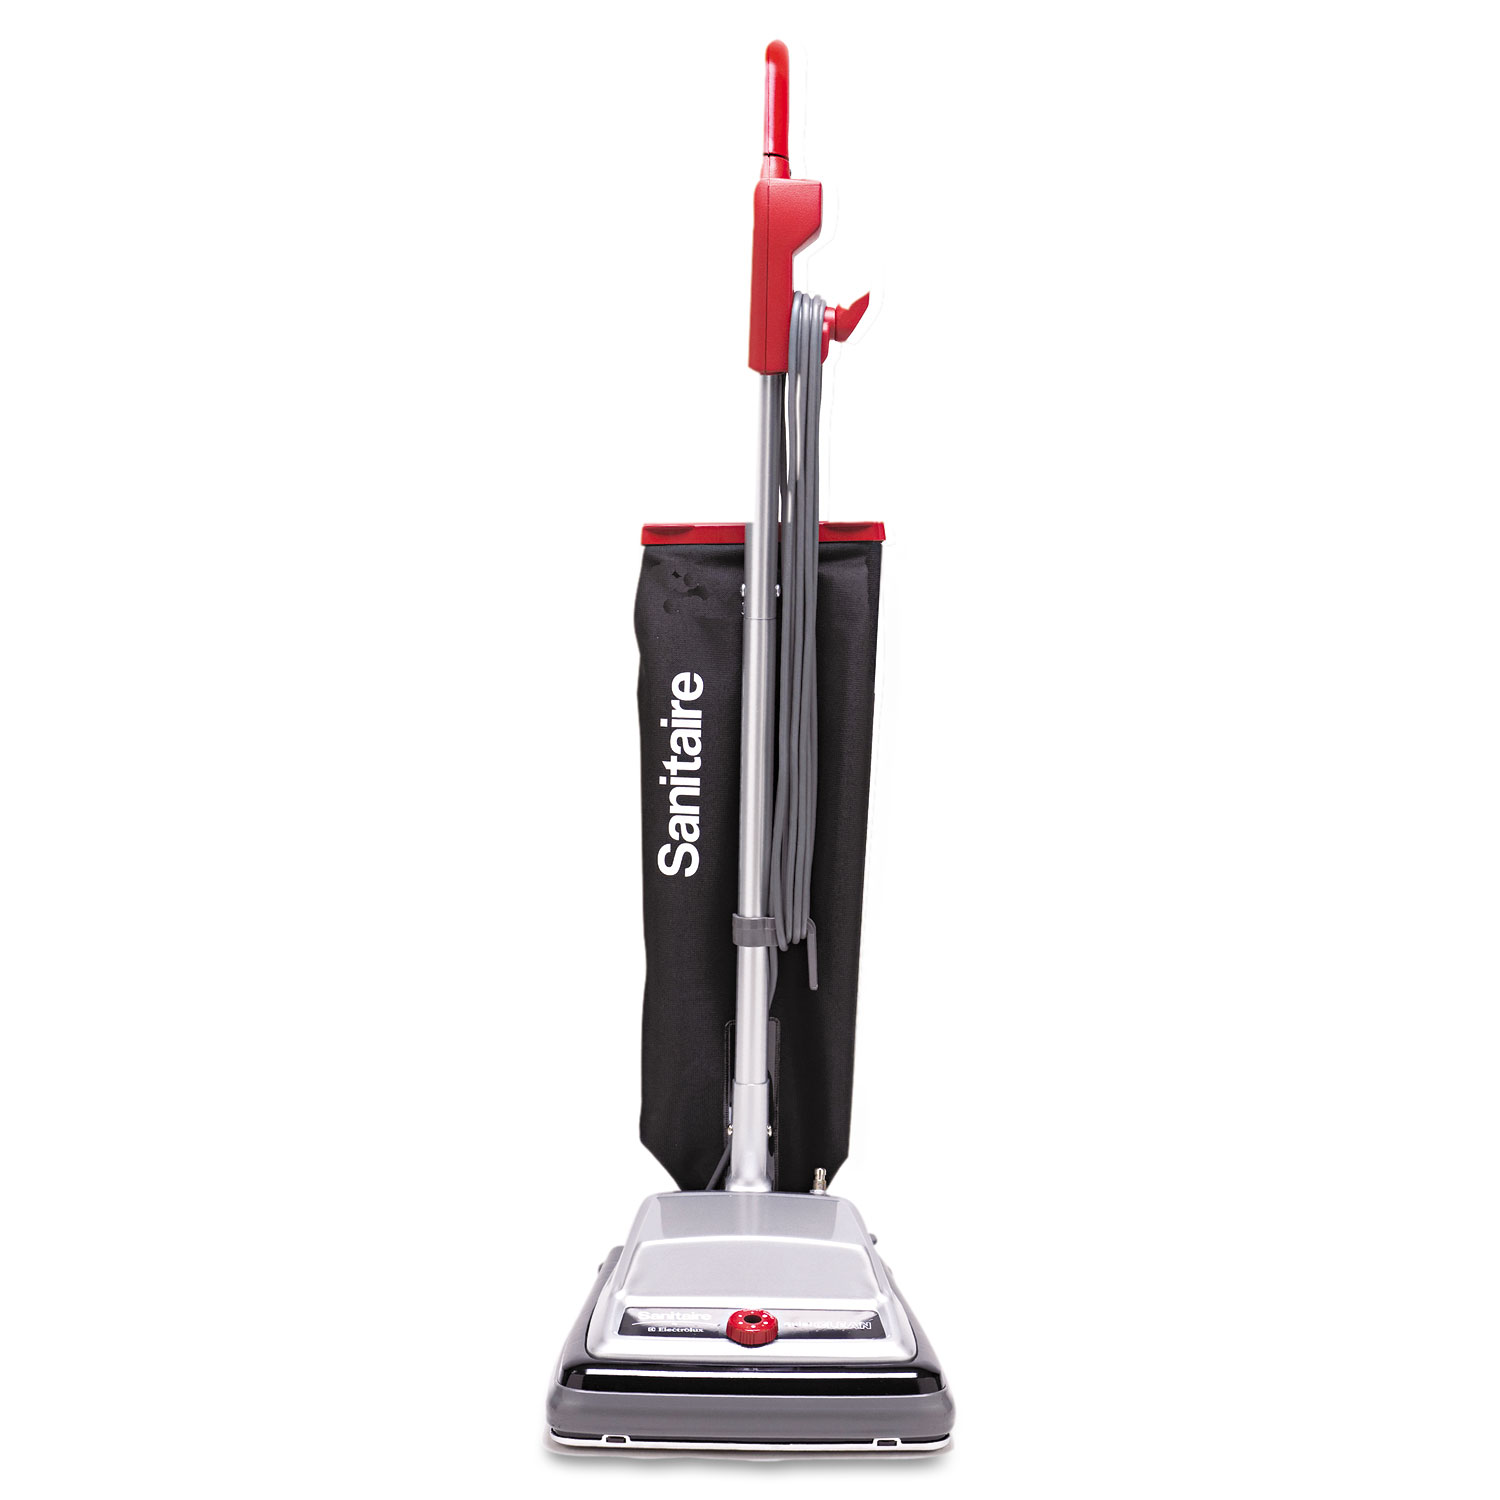  Sanitaire SC889B TRADITION QuietClean Upright Vacuum, 18 lb, Gray/Red/Black (EURSC889B) 